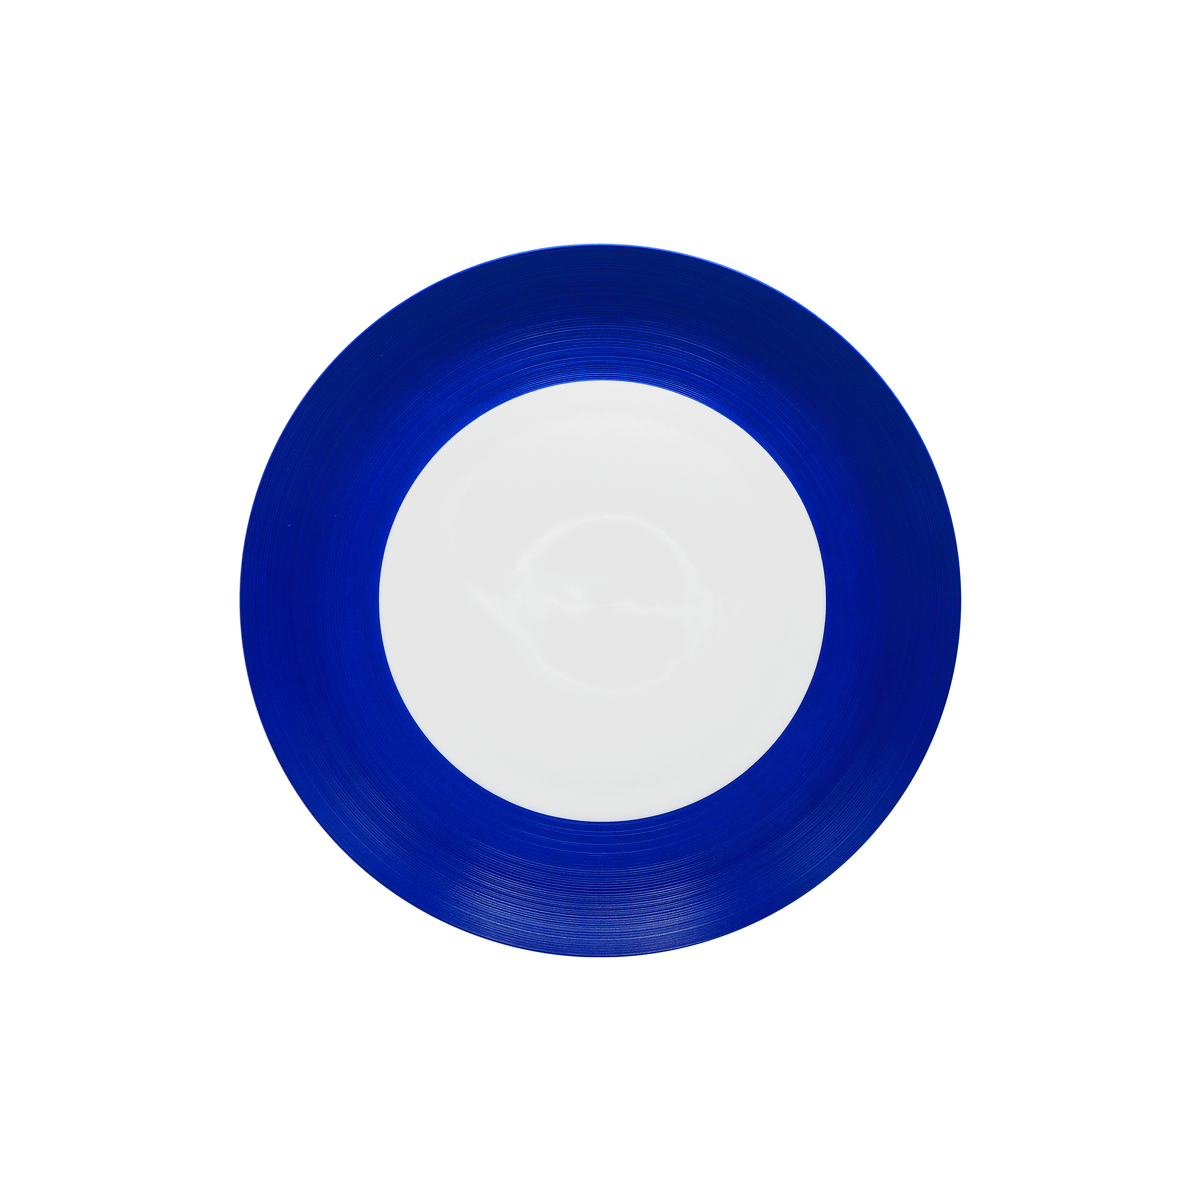 HEMISPHERE Royal Blue - Flat round dish, medium